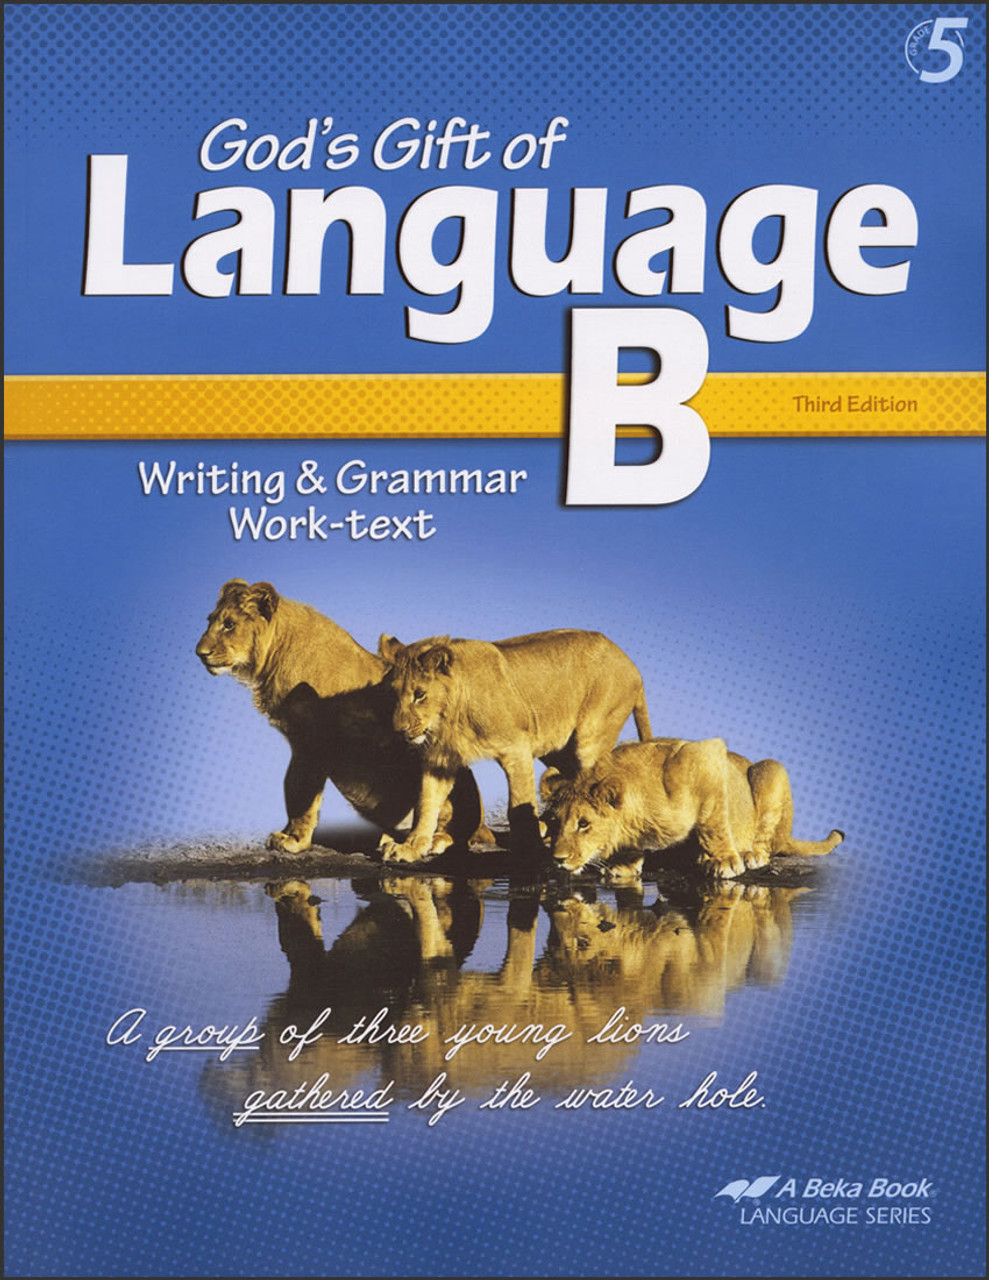 God's Gift of Language B, 3rd edition